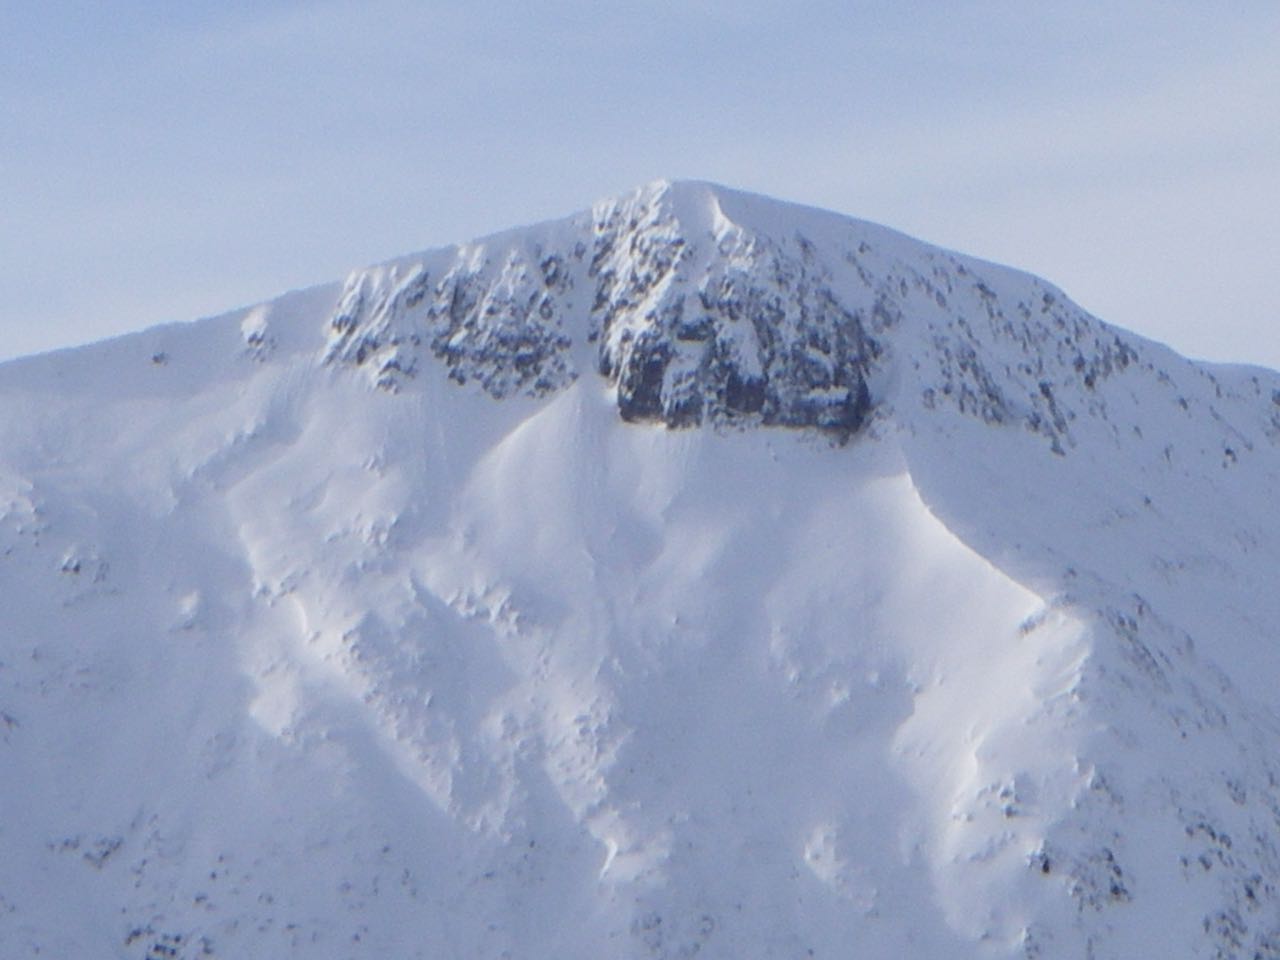 Stob Coire Altruim with wind sculptured ridge below the crag